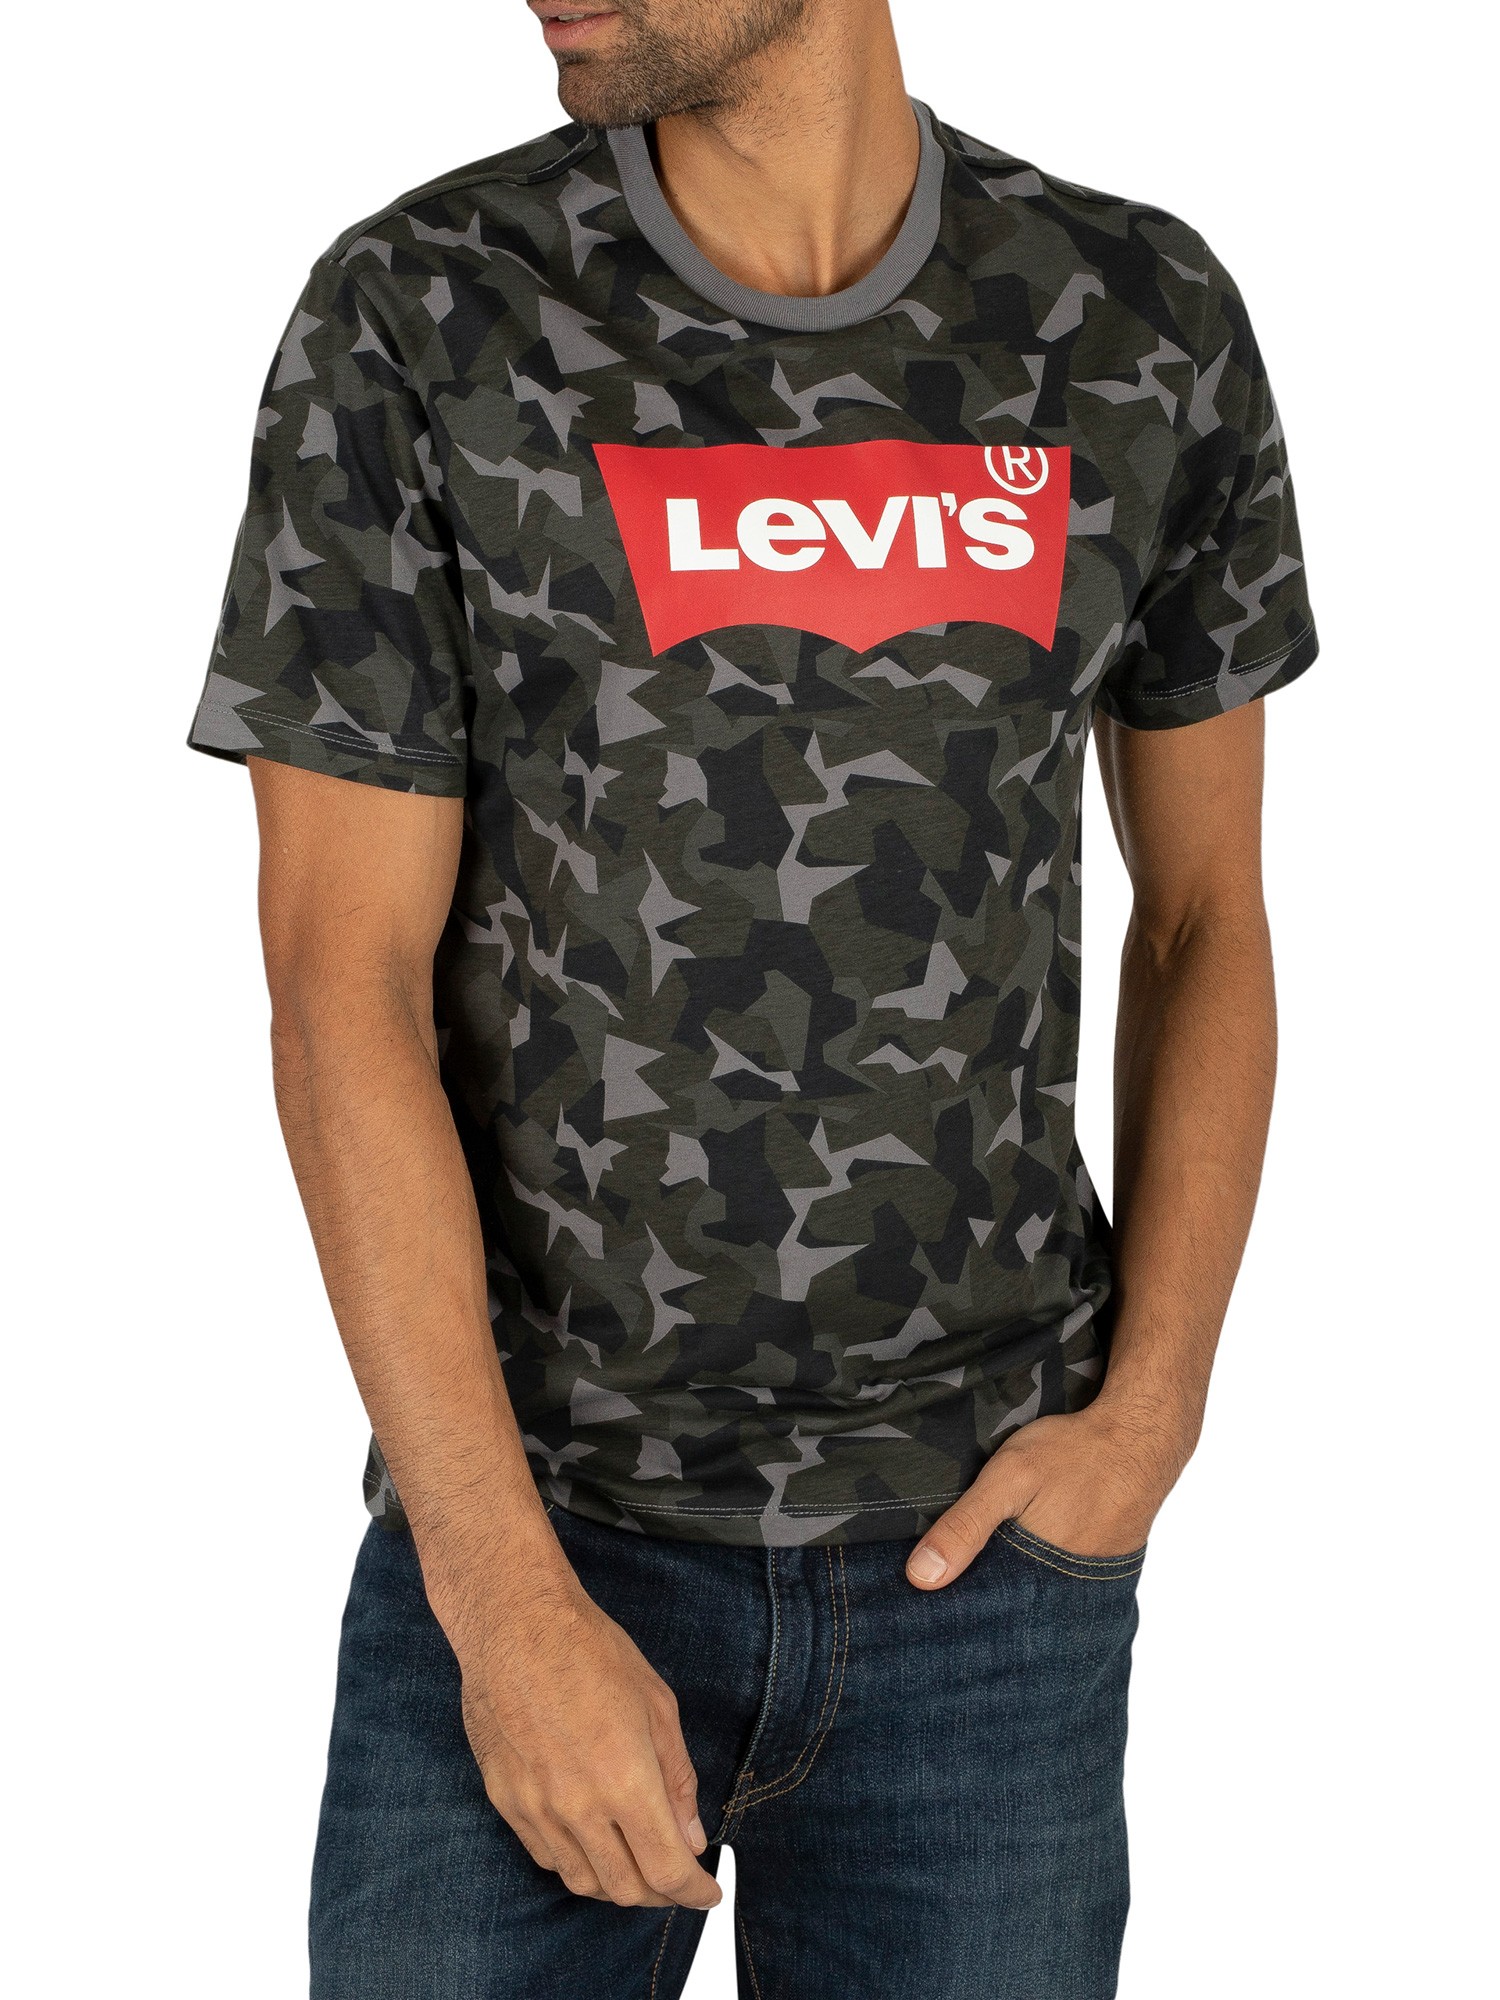 levi's camouflage t shirt